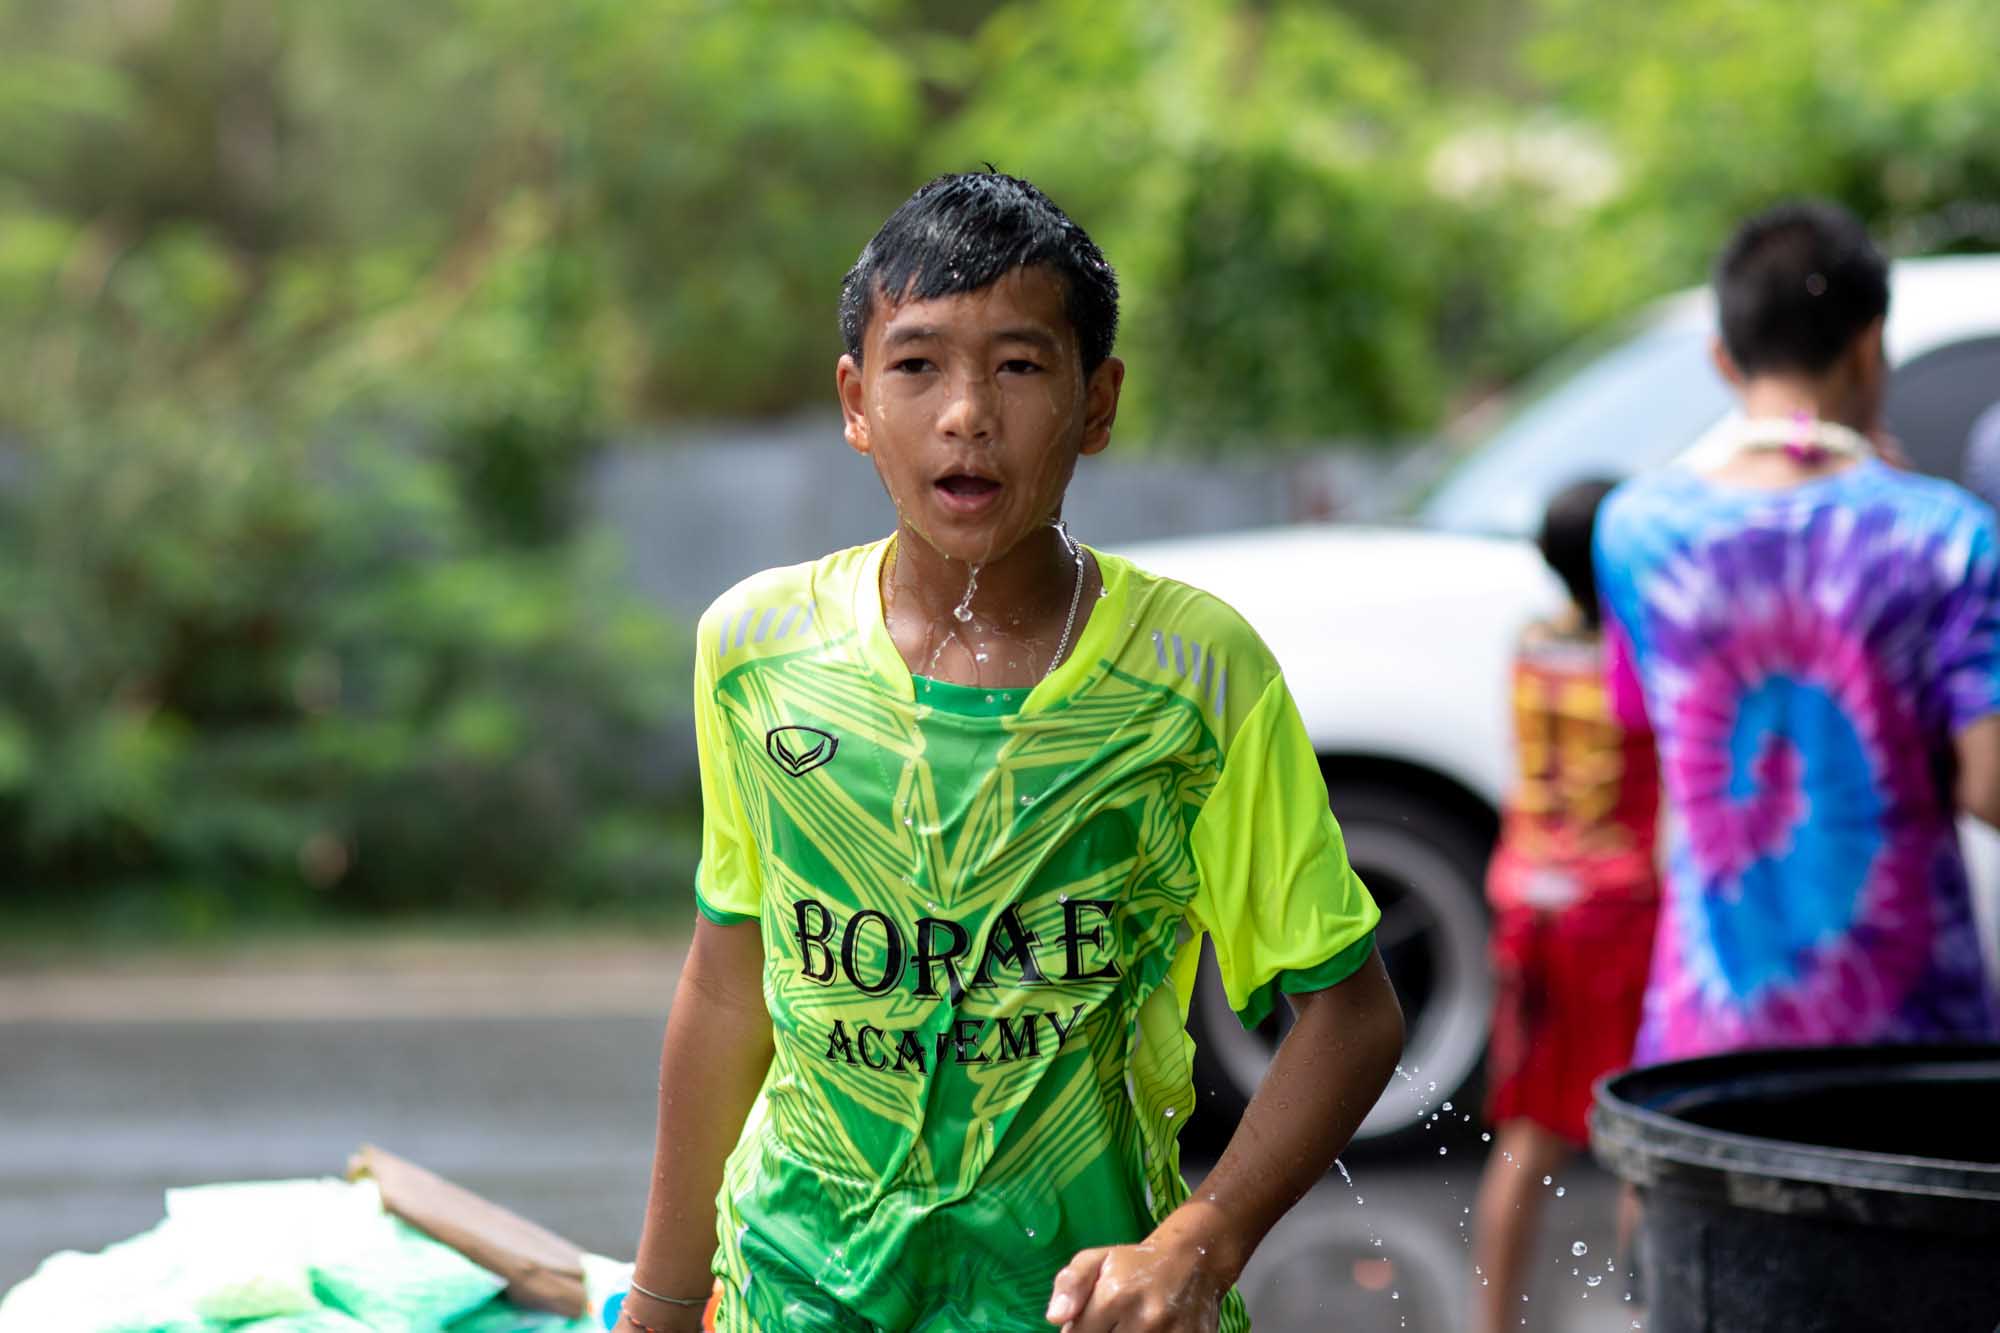 Soaked boy at Songkran water festival in Phuket, Thailand